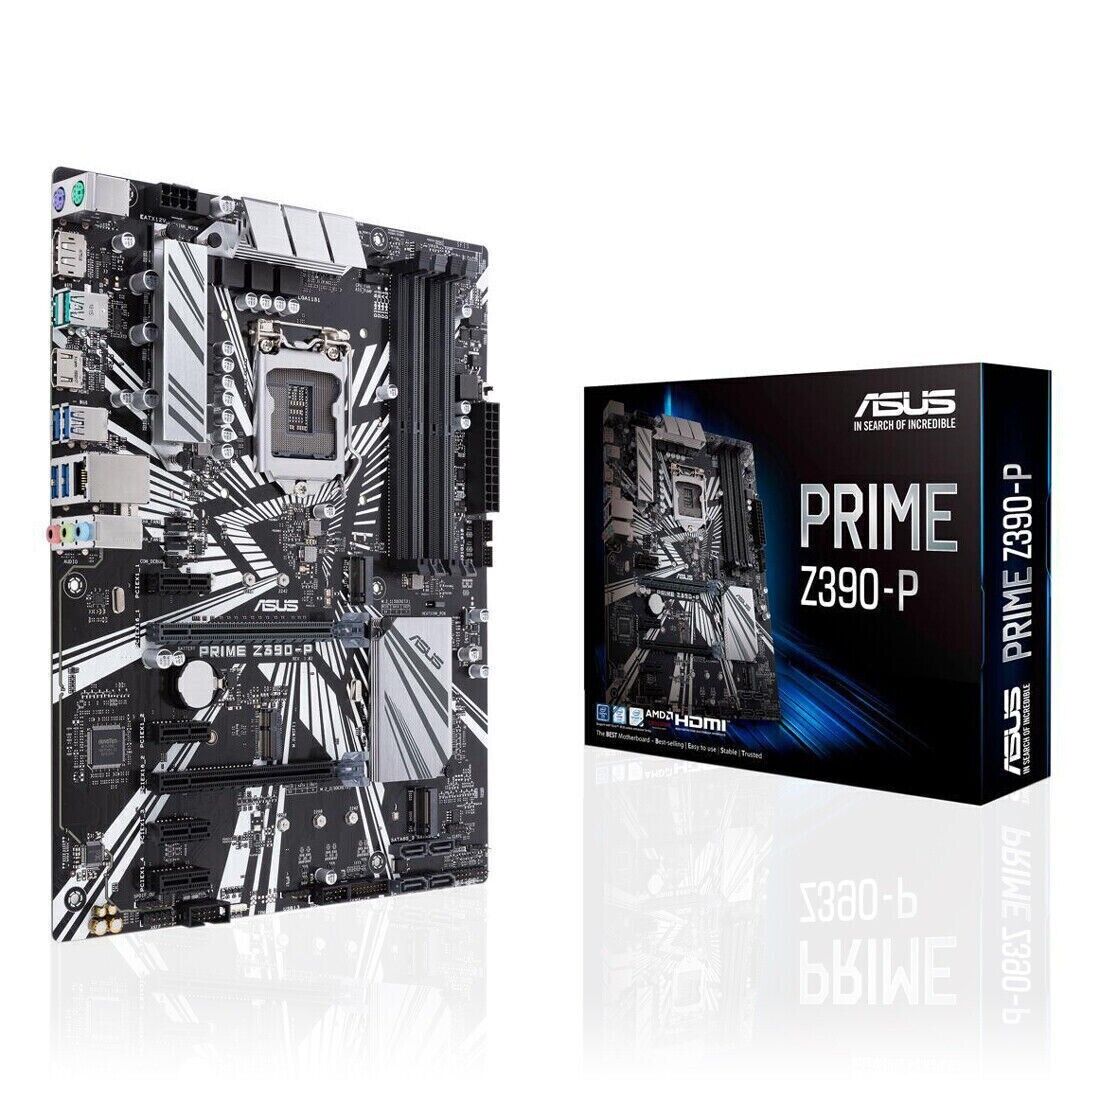 NEW ASUS Prime Z390-P LGA1151 (Intel 8th /9th Gen) ATX Motherboard w/retai box